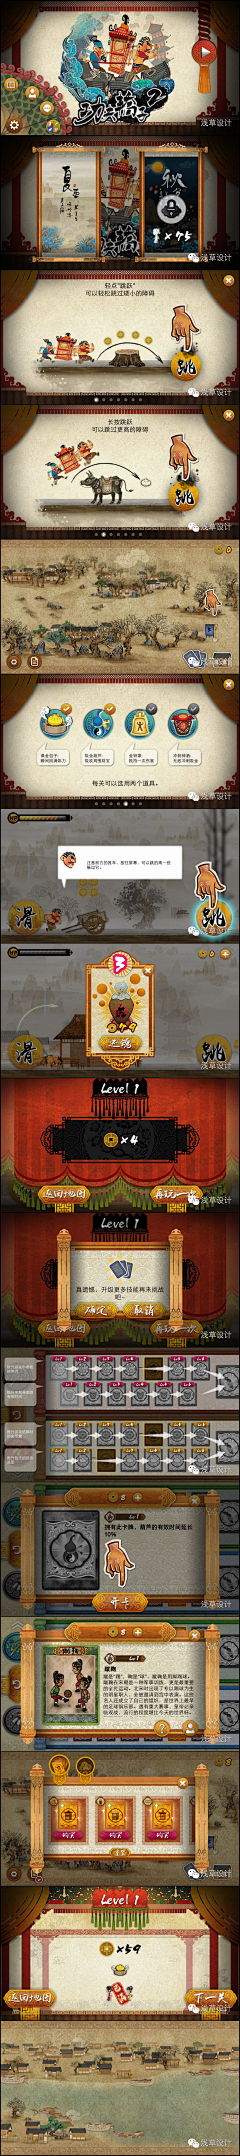 TaOZi-lau采集到手机游戏界面